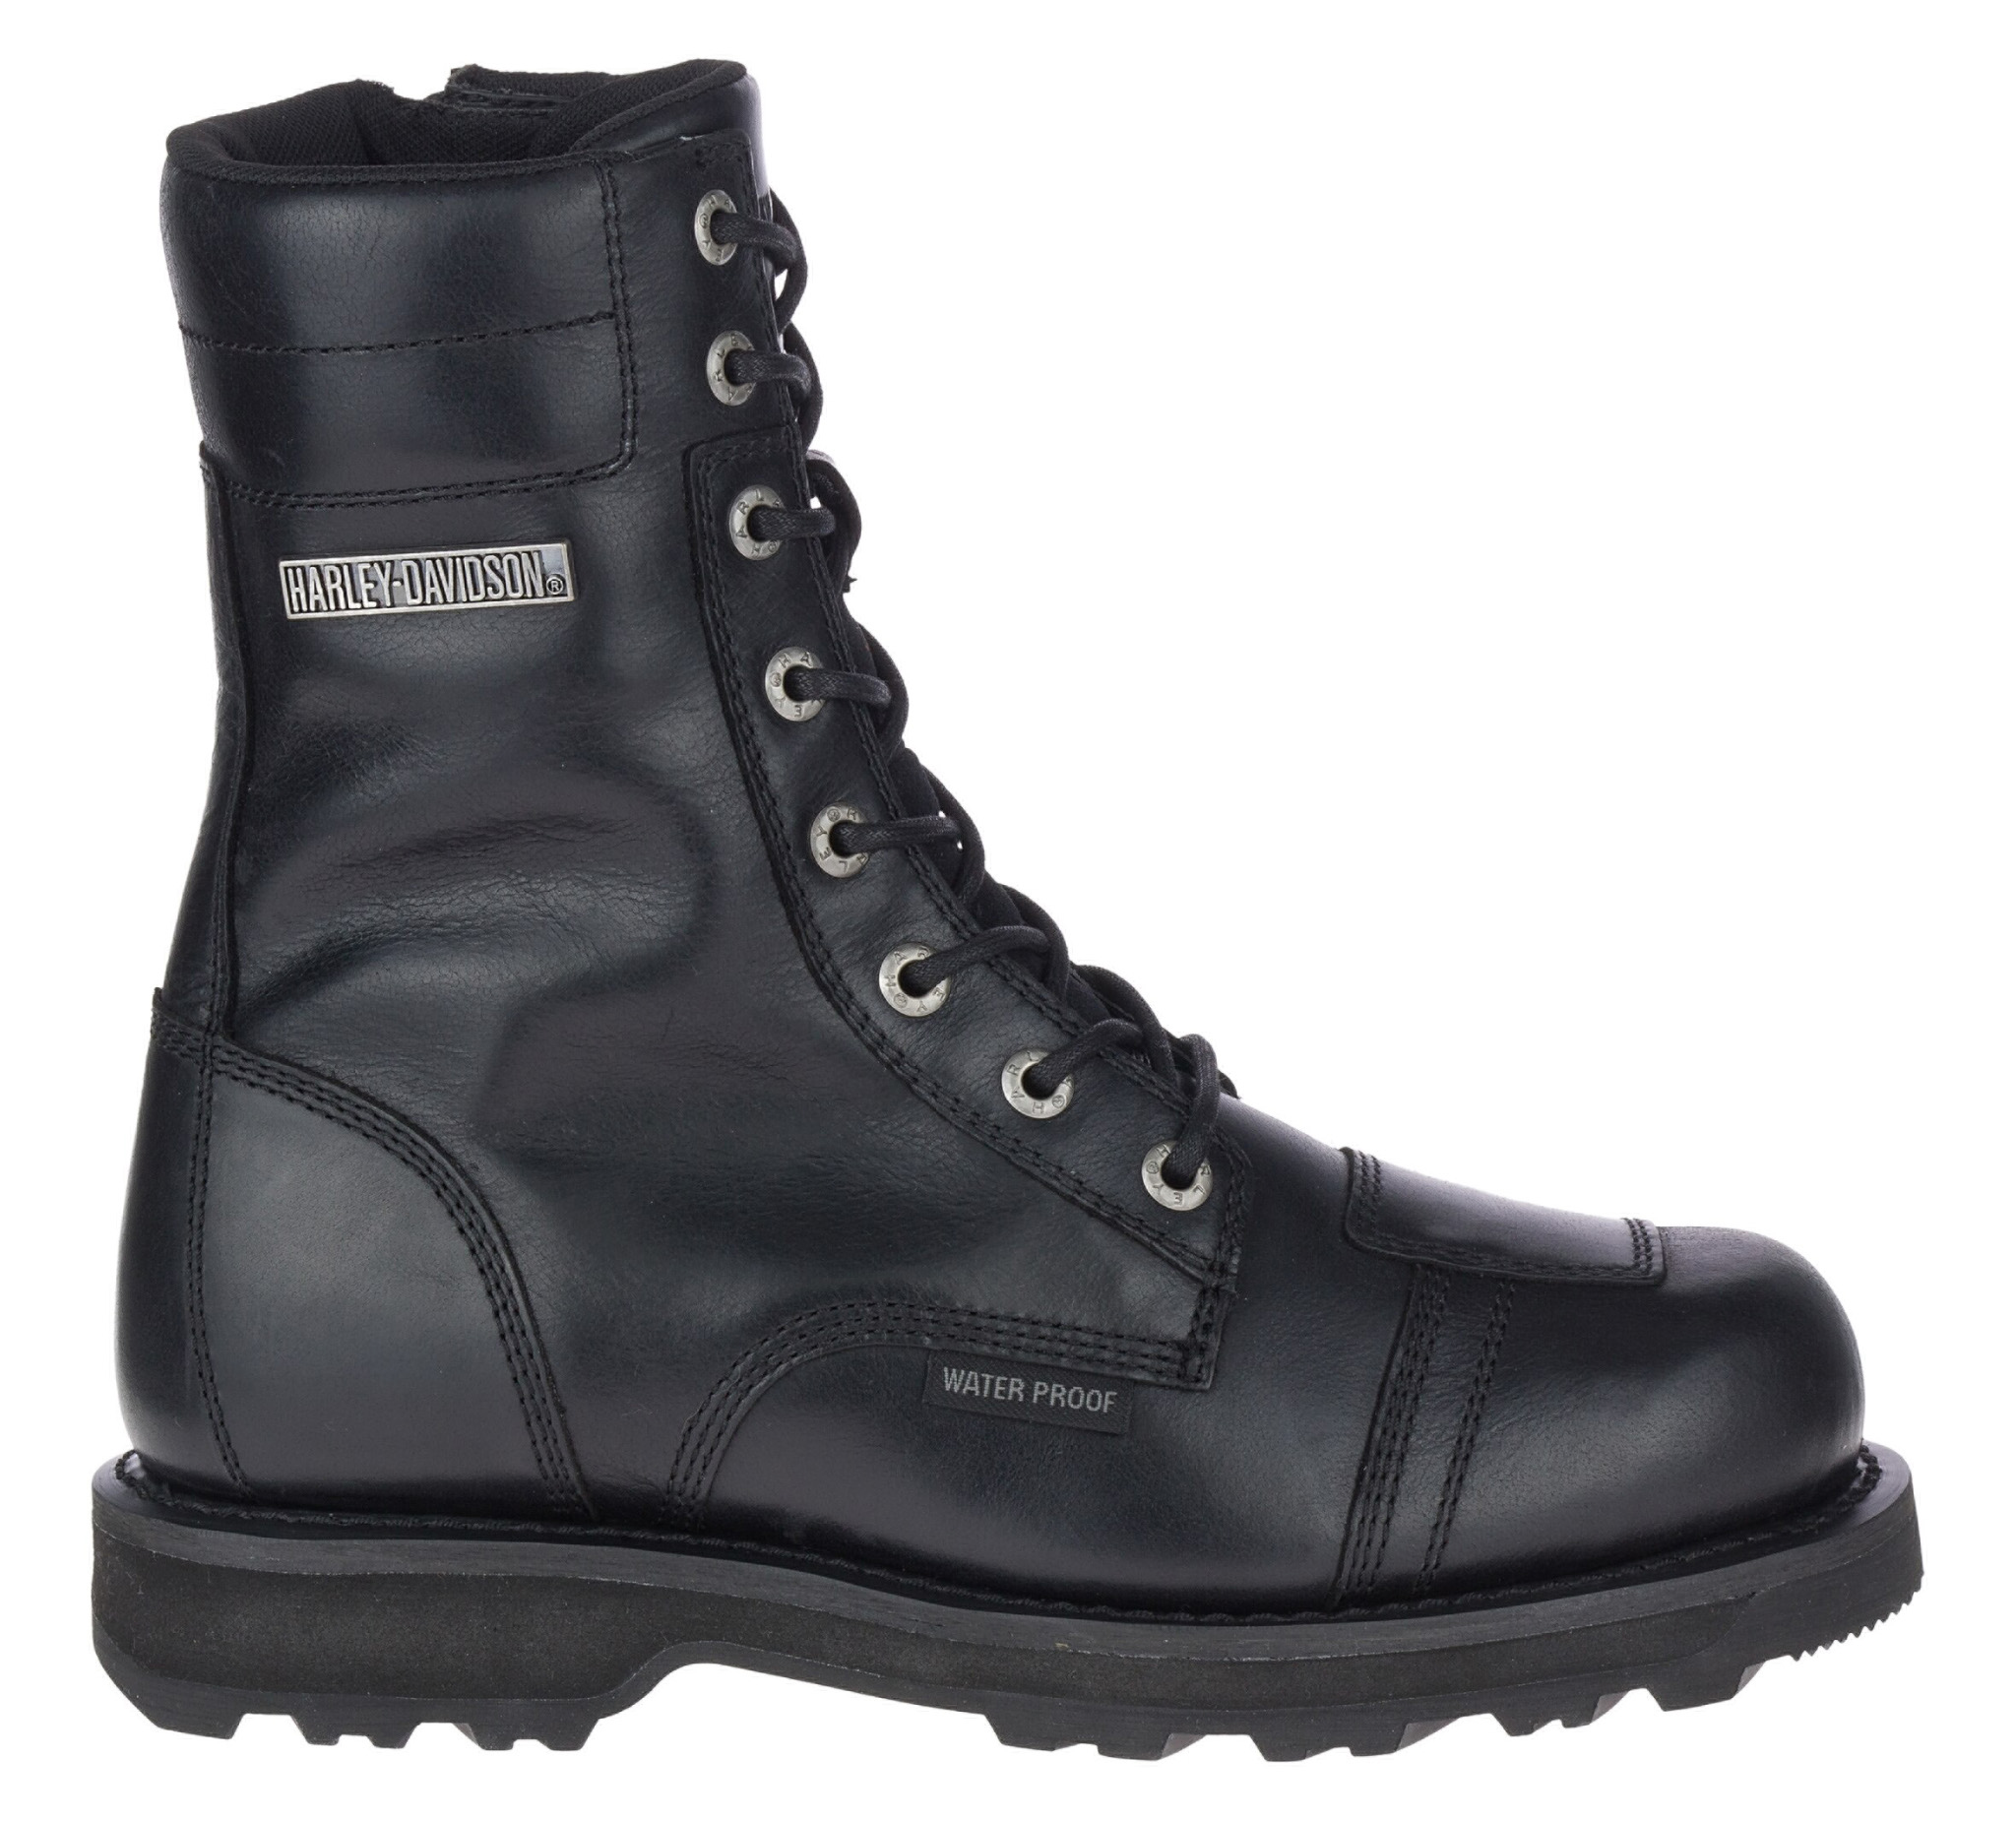 steel toe harley davidson boots